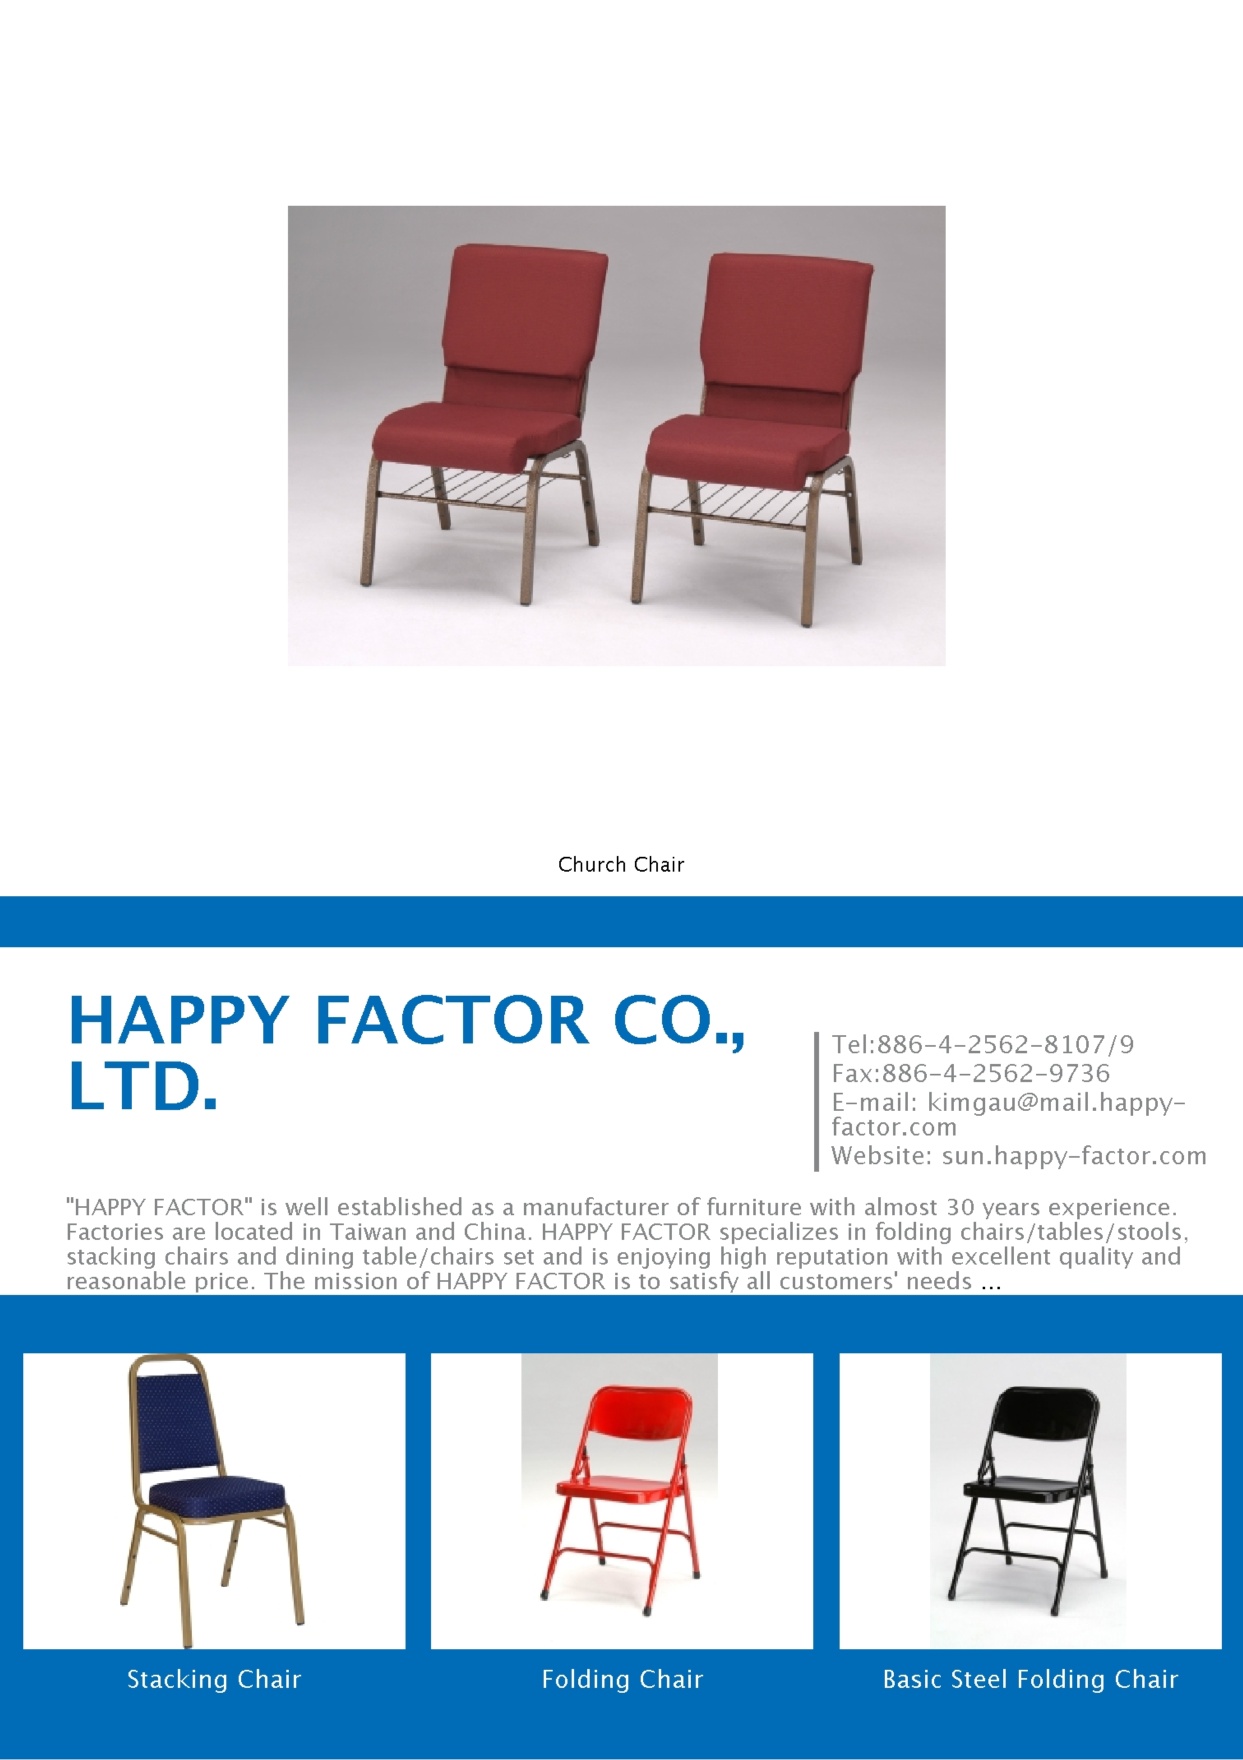 HAPPY FACTOR CO., LTD.